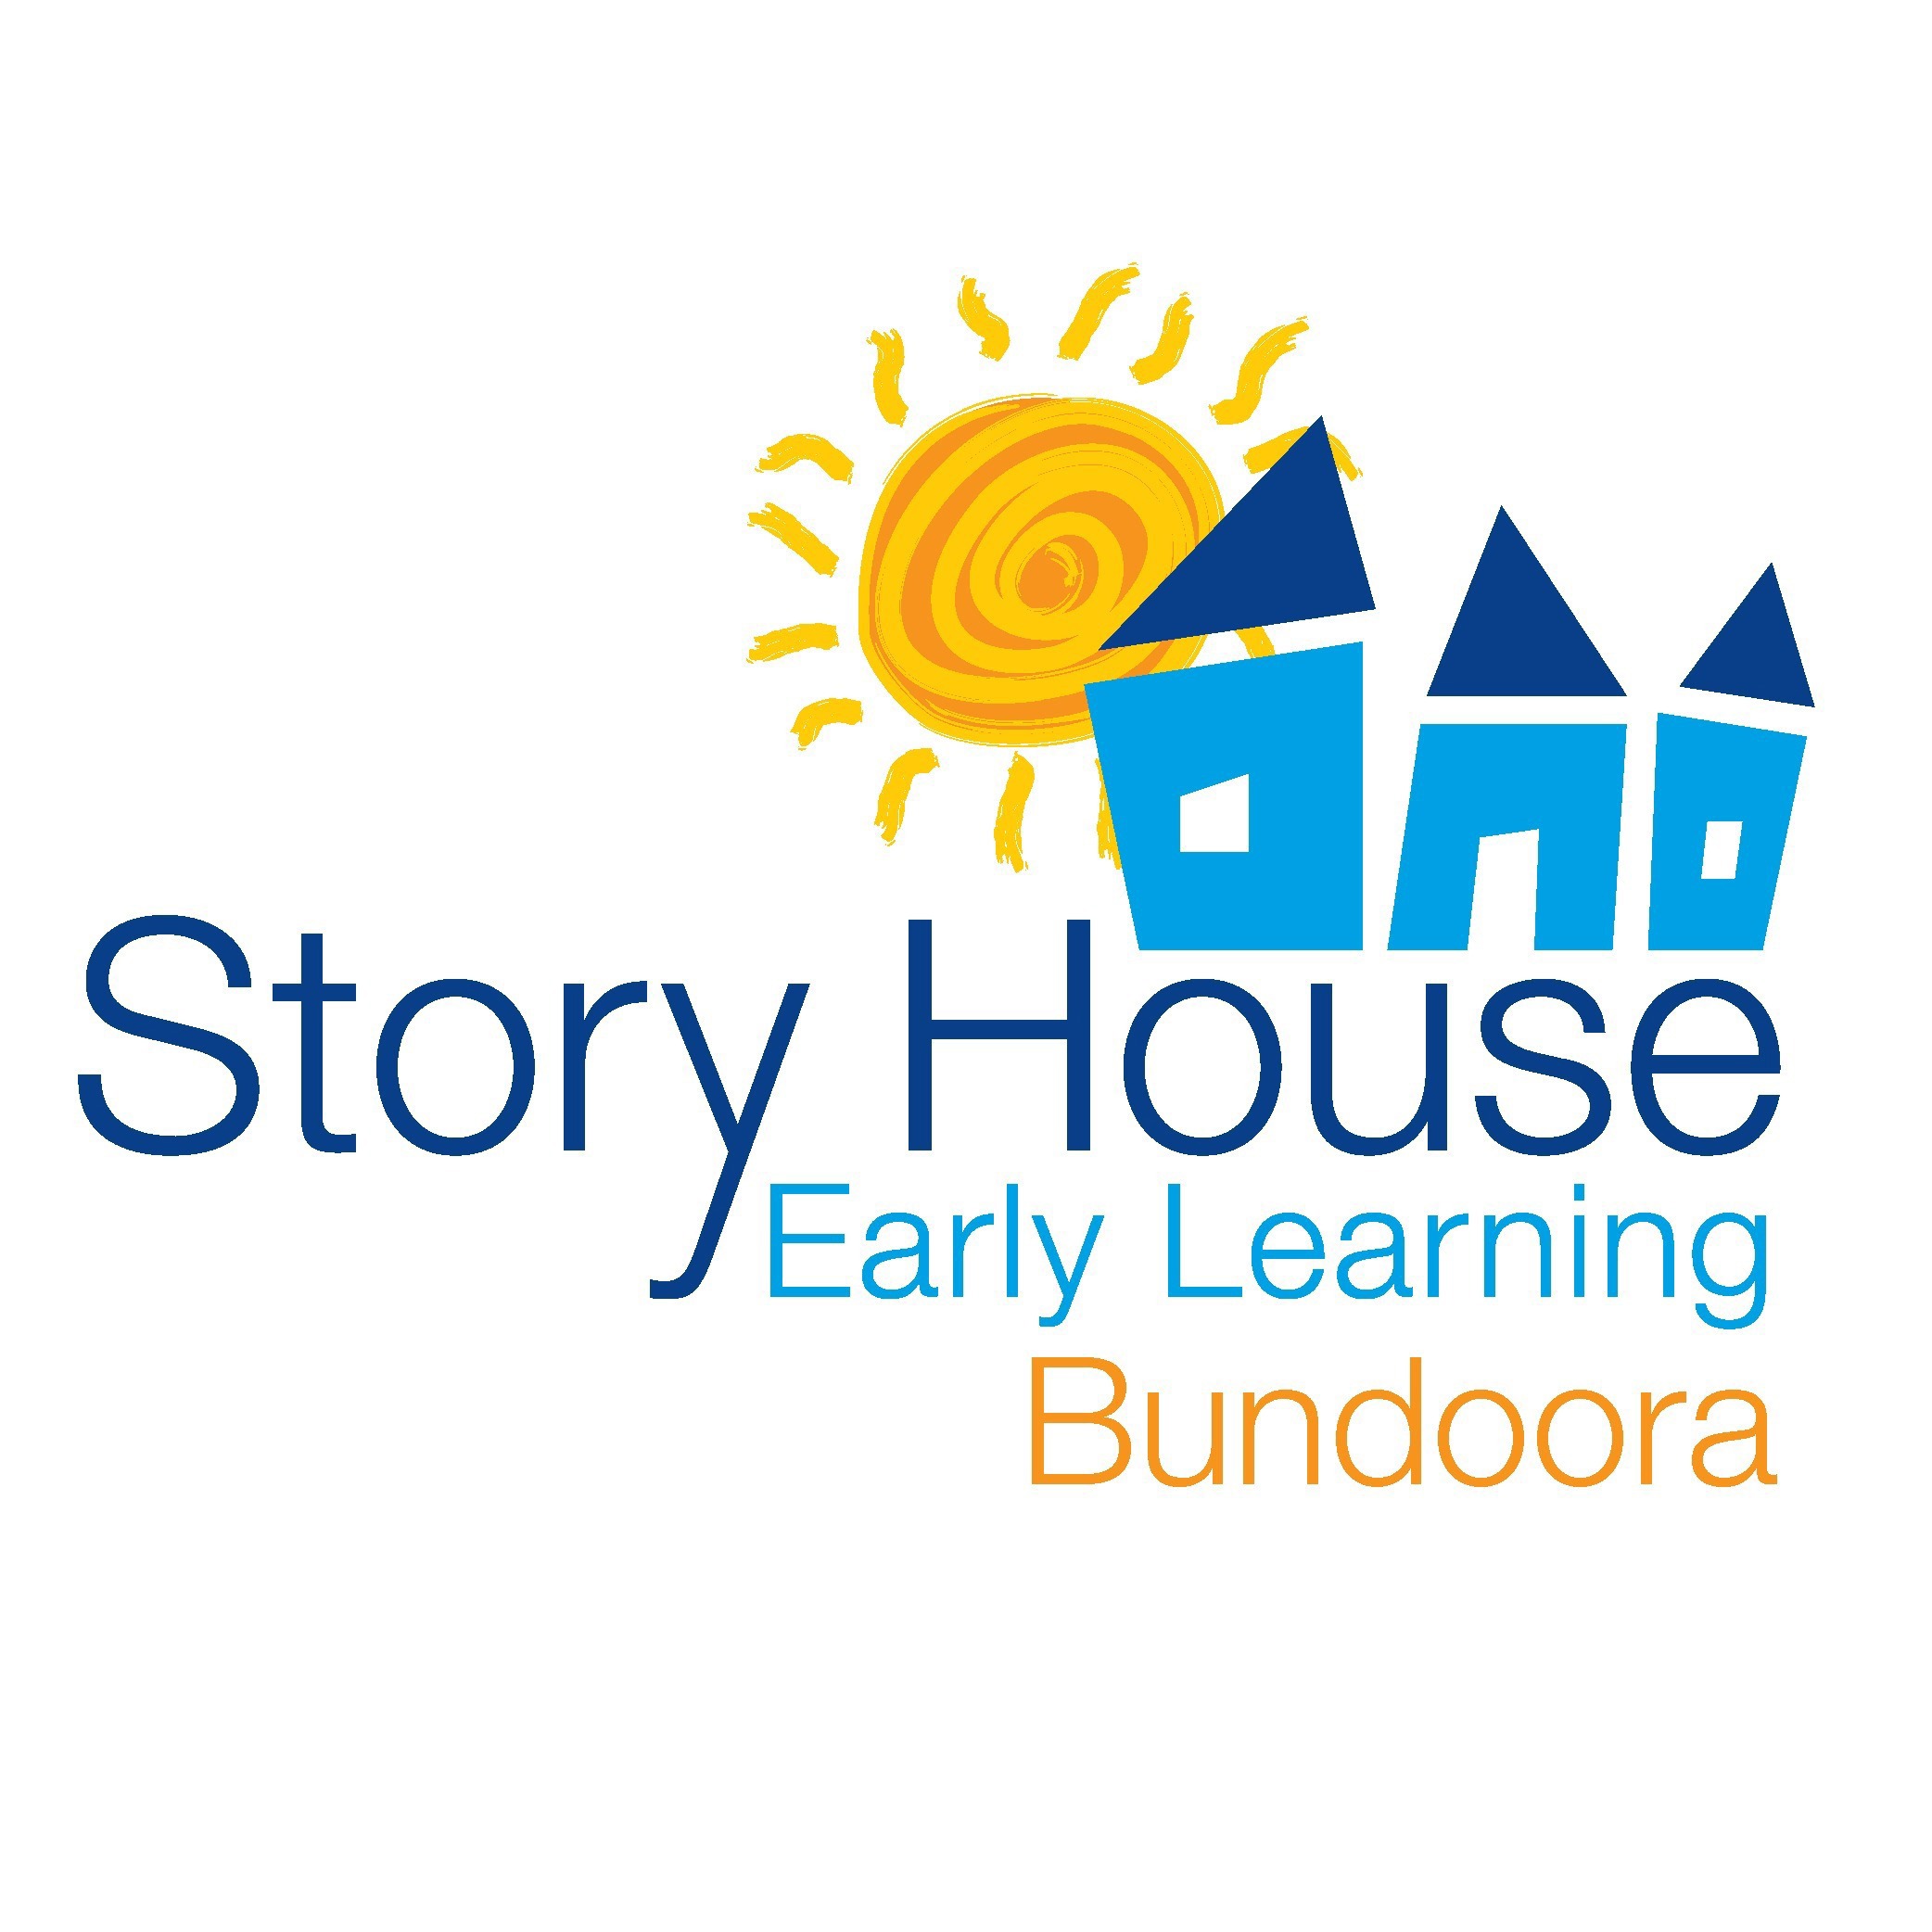 Story House Early Learning Bundoora